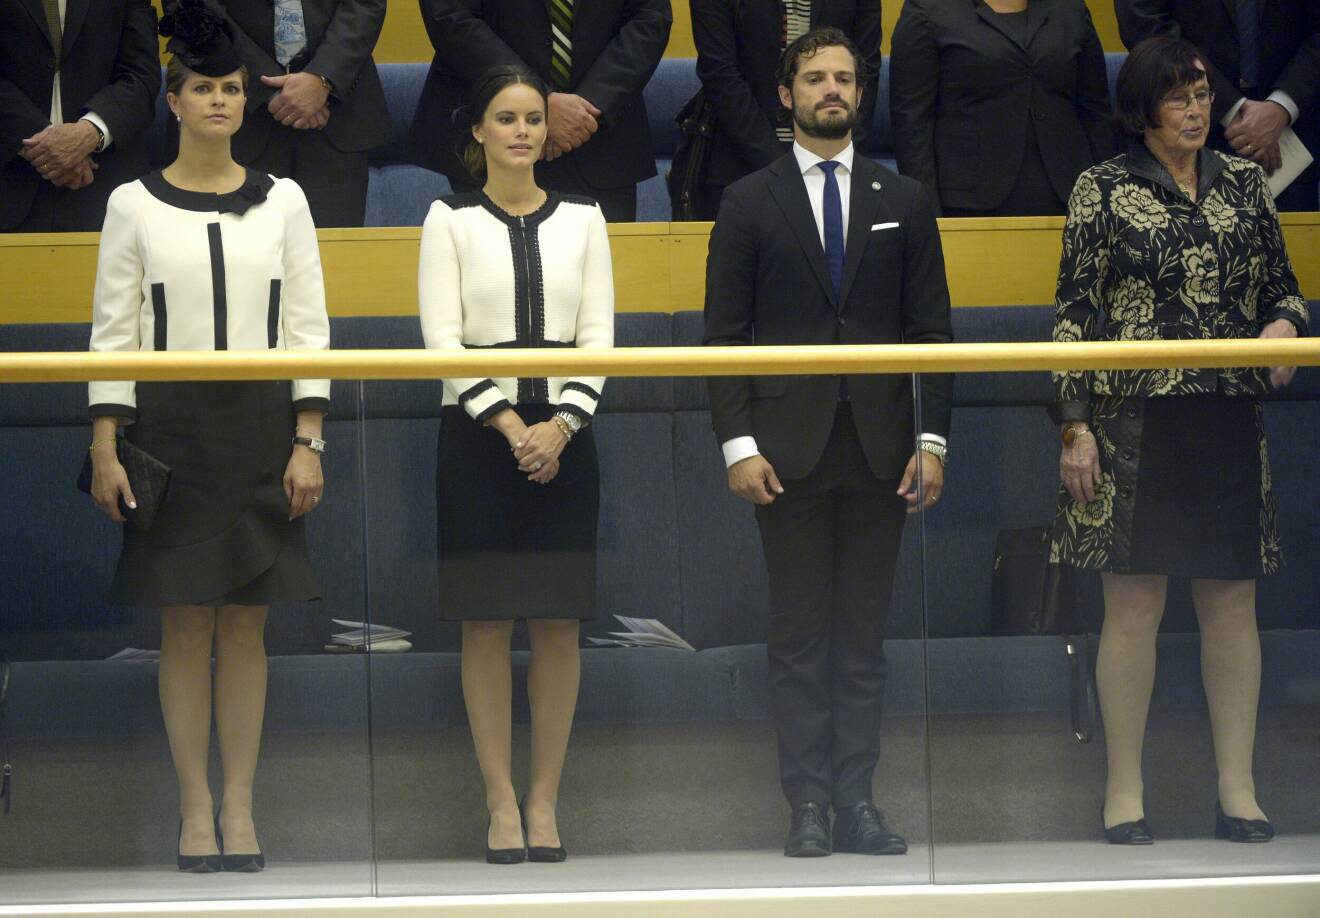 Prinsessan Madeleine, prinsessan Sofia och prins Carl Philip på riksmötets öppnande 2020